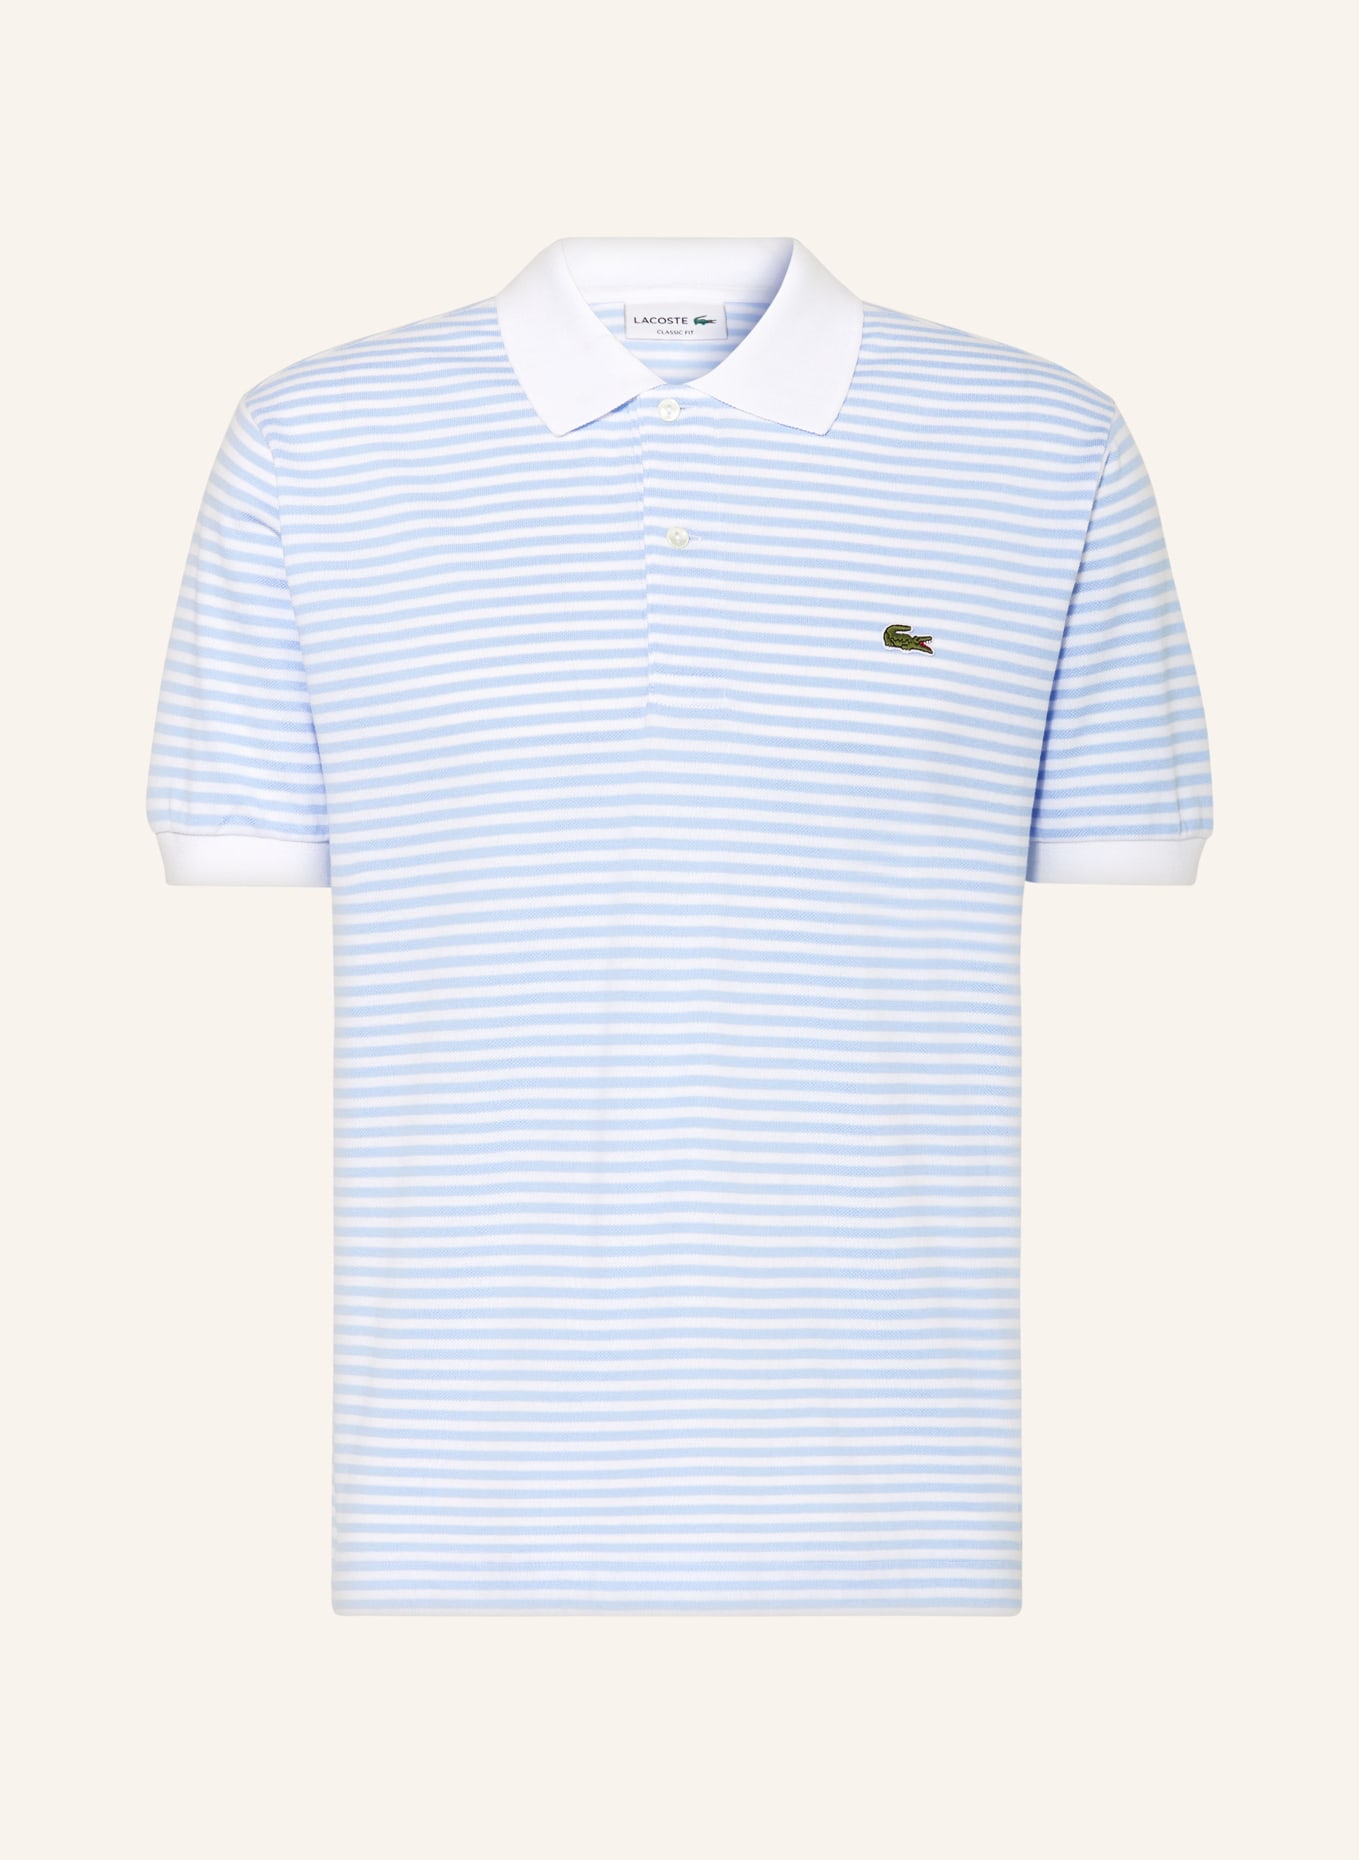 LACOSTE Piqué-Poloshirt Classic Fit, Farbe: WEISS/ HELLBLAU (Bild 1)